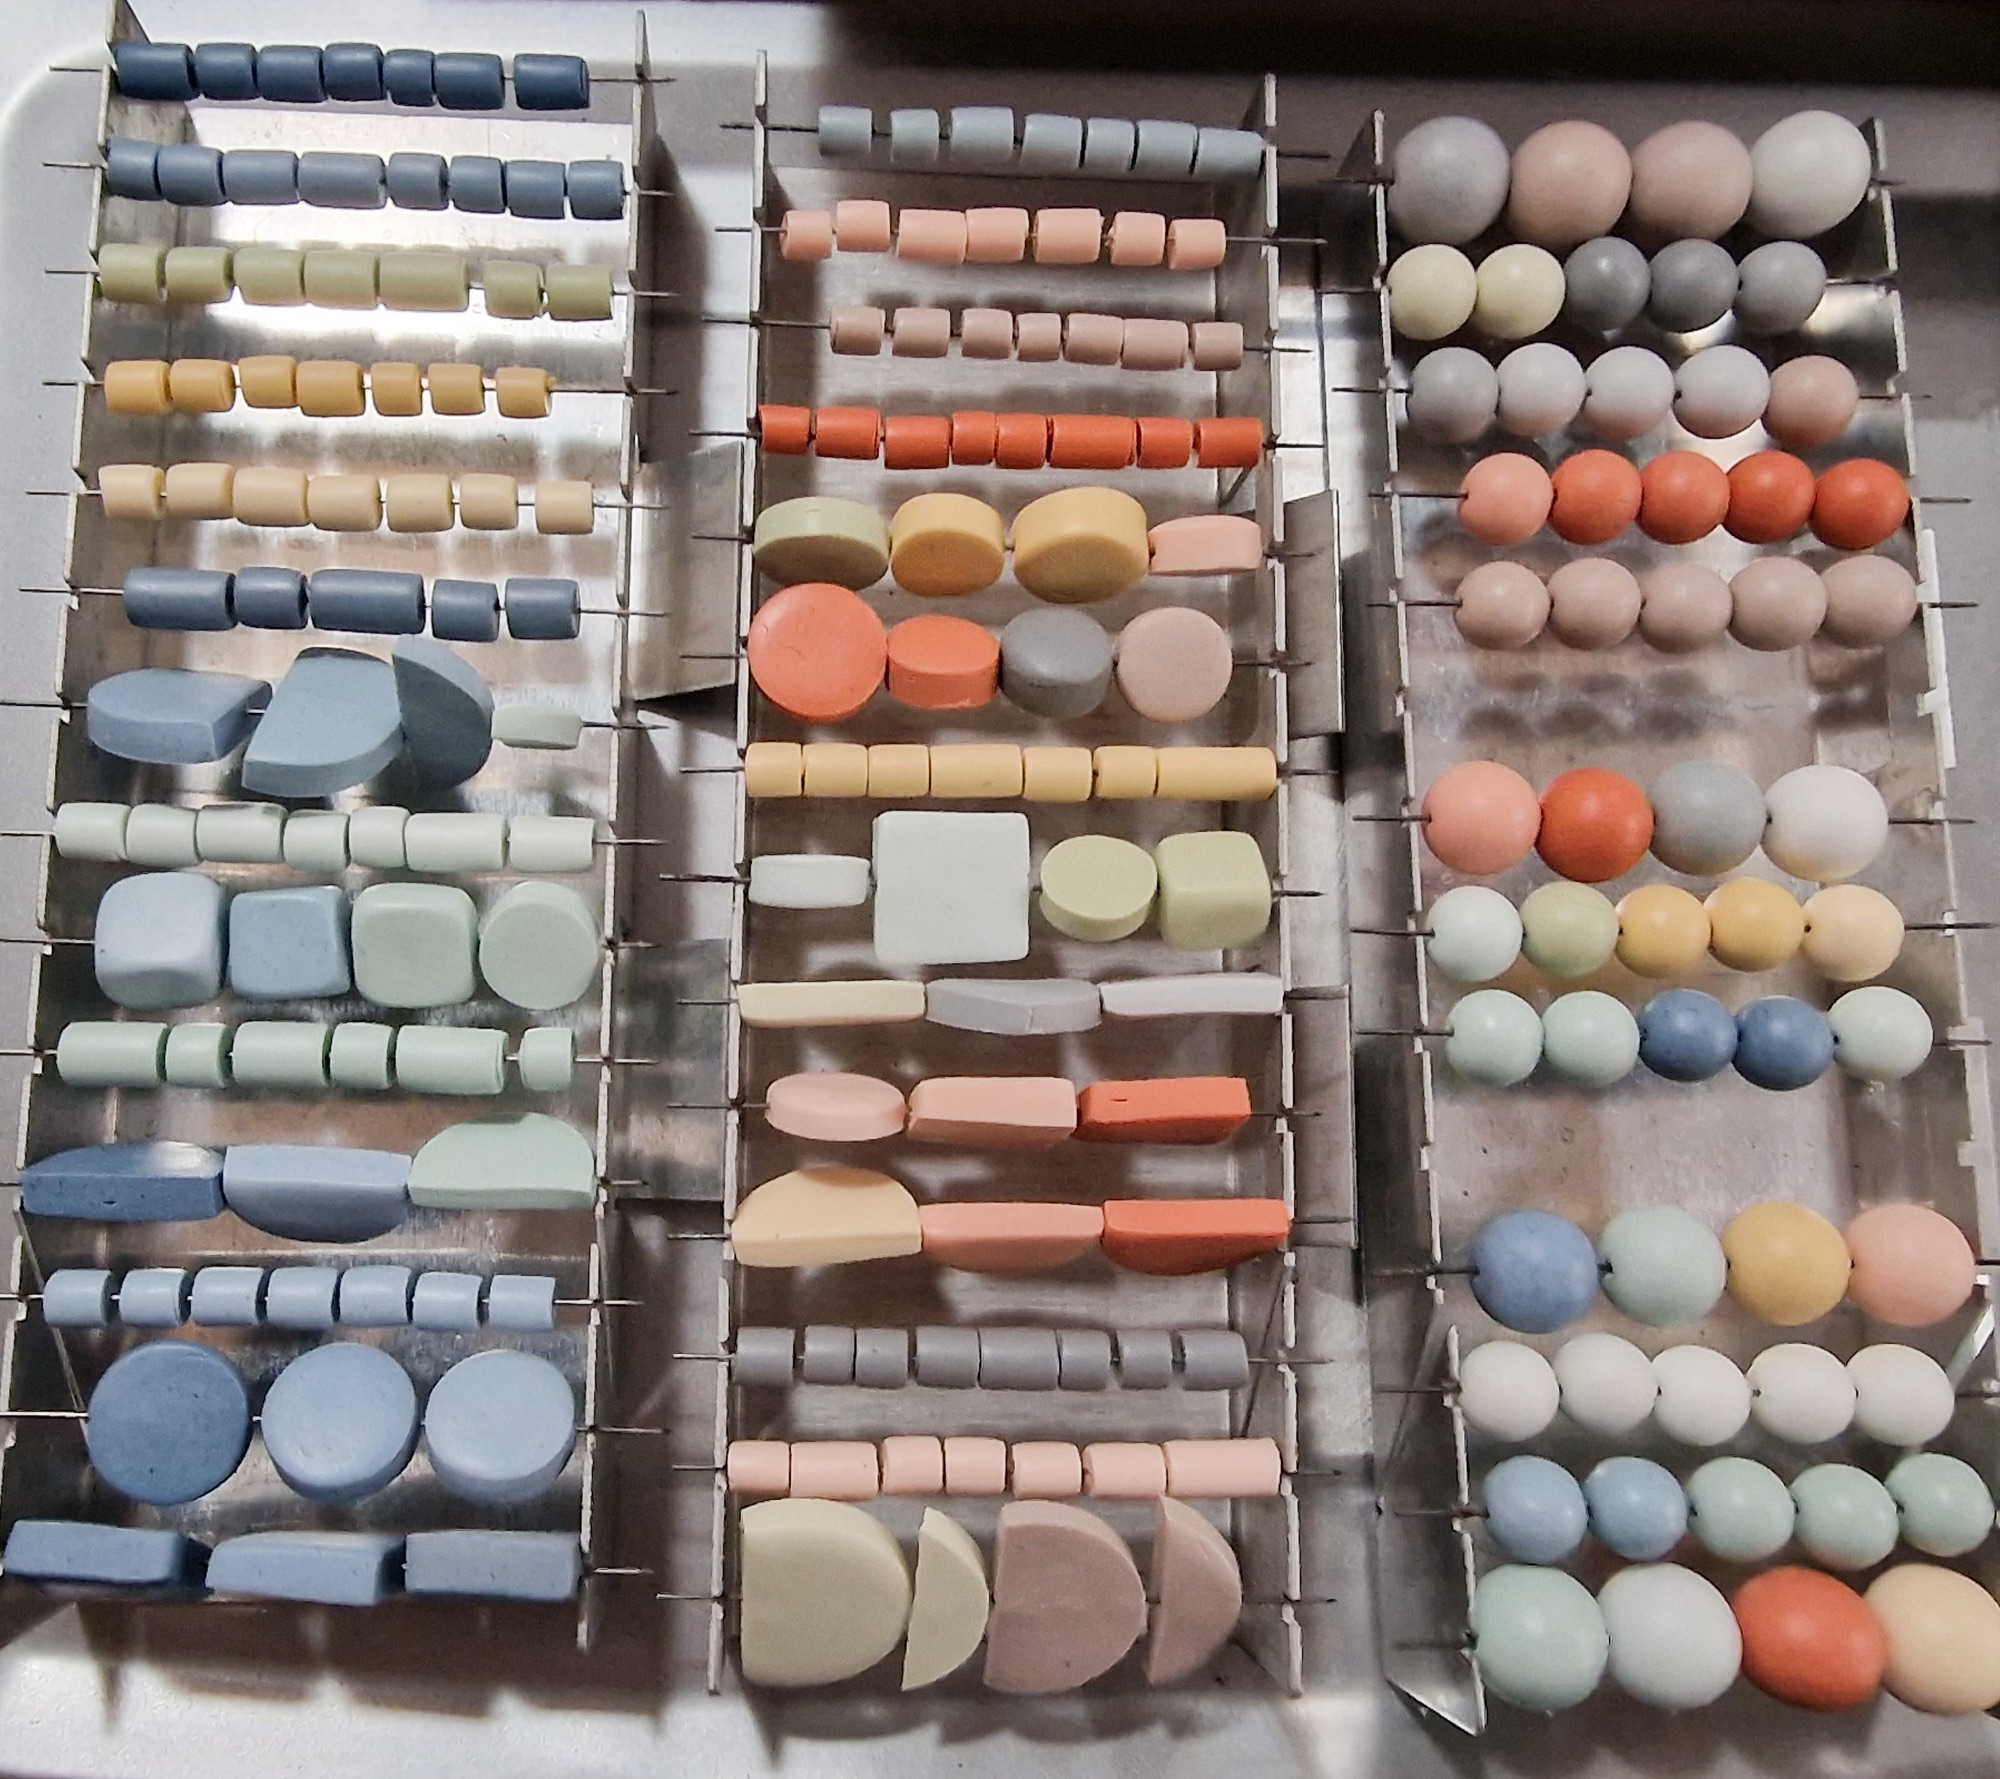 Handmade polymer clay beads on racks waiting to be fired